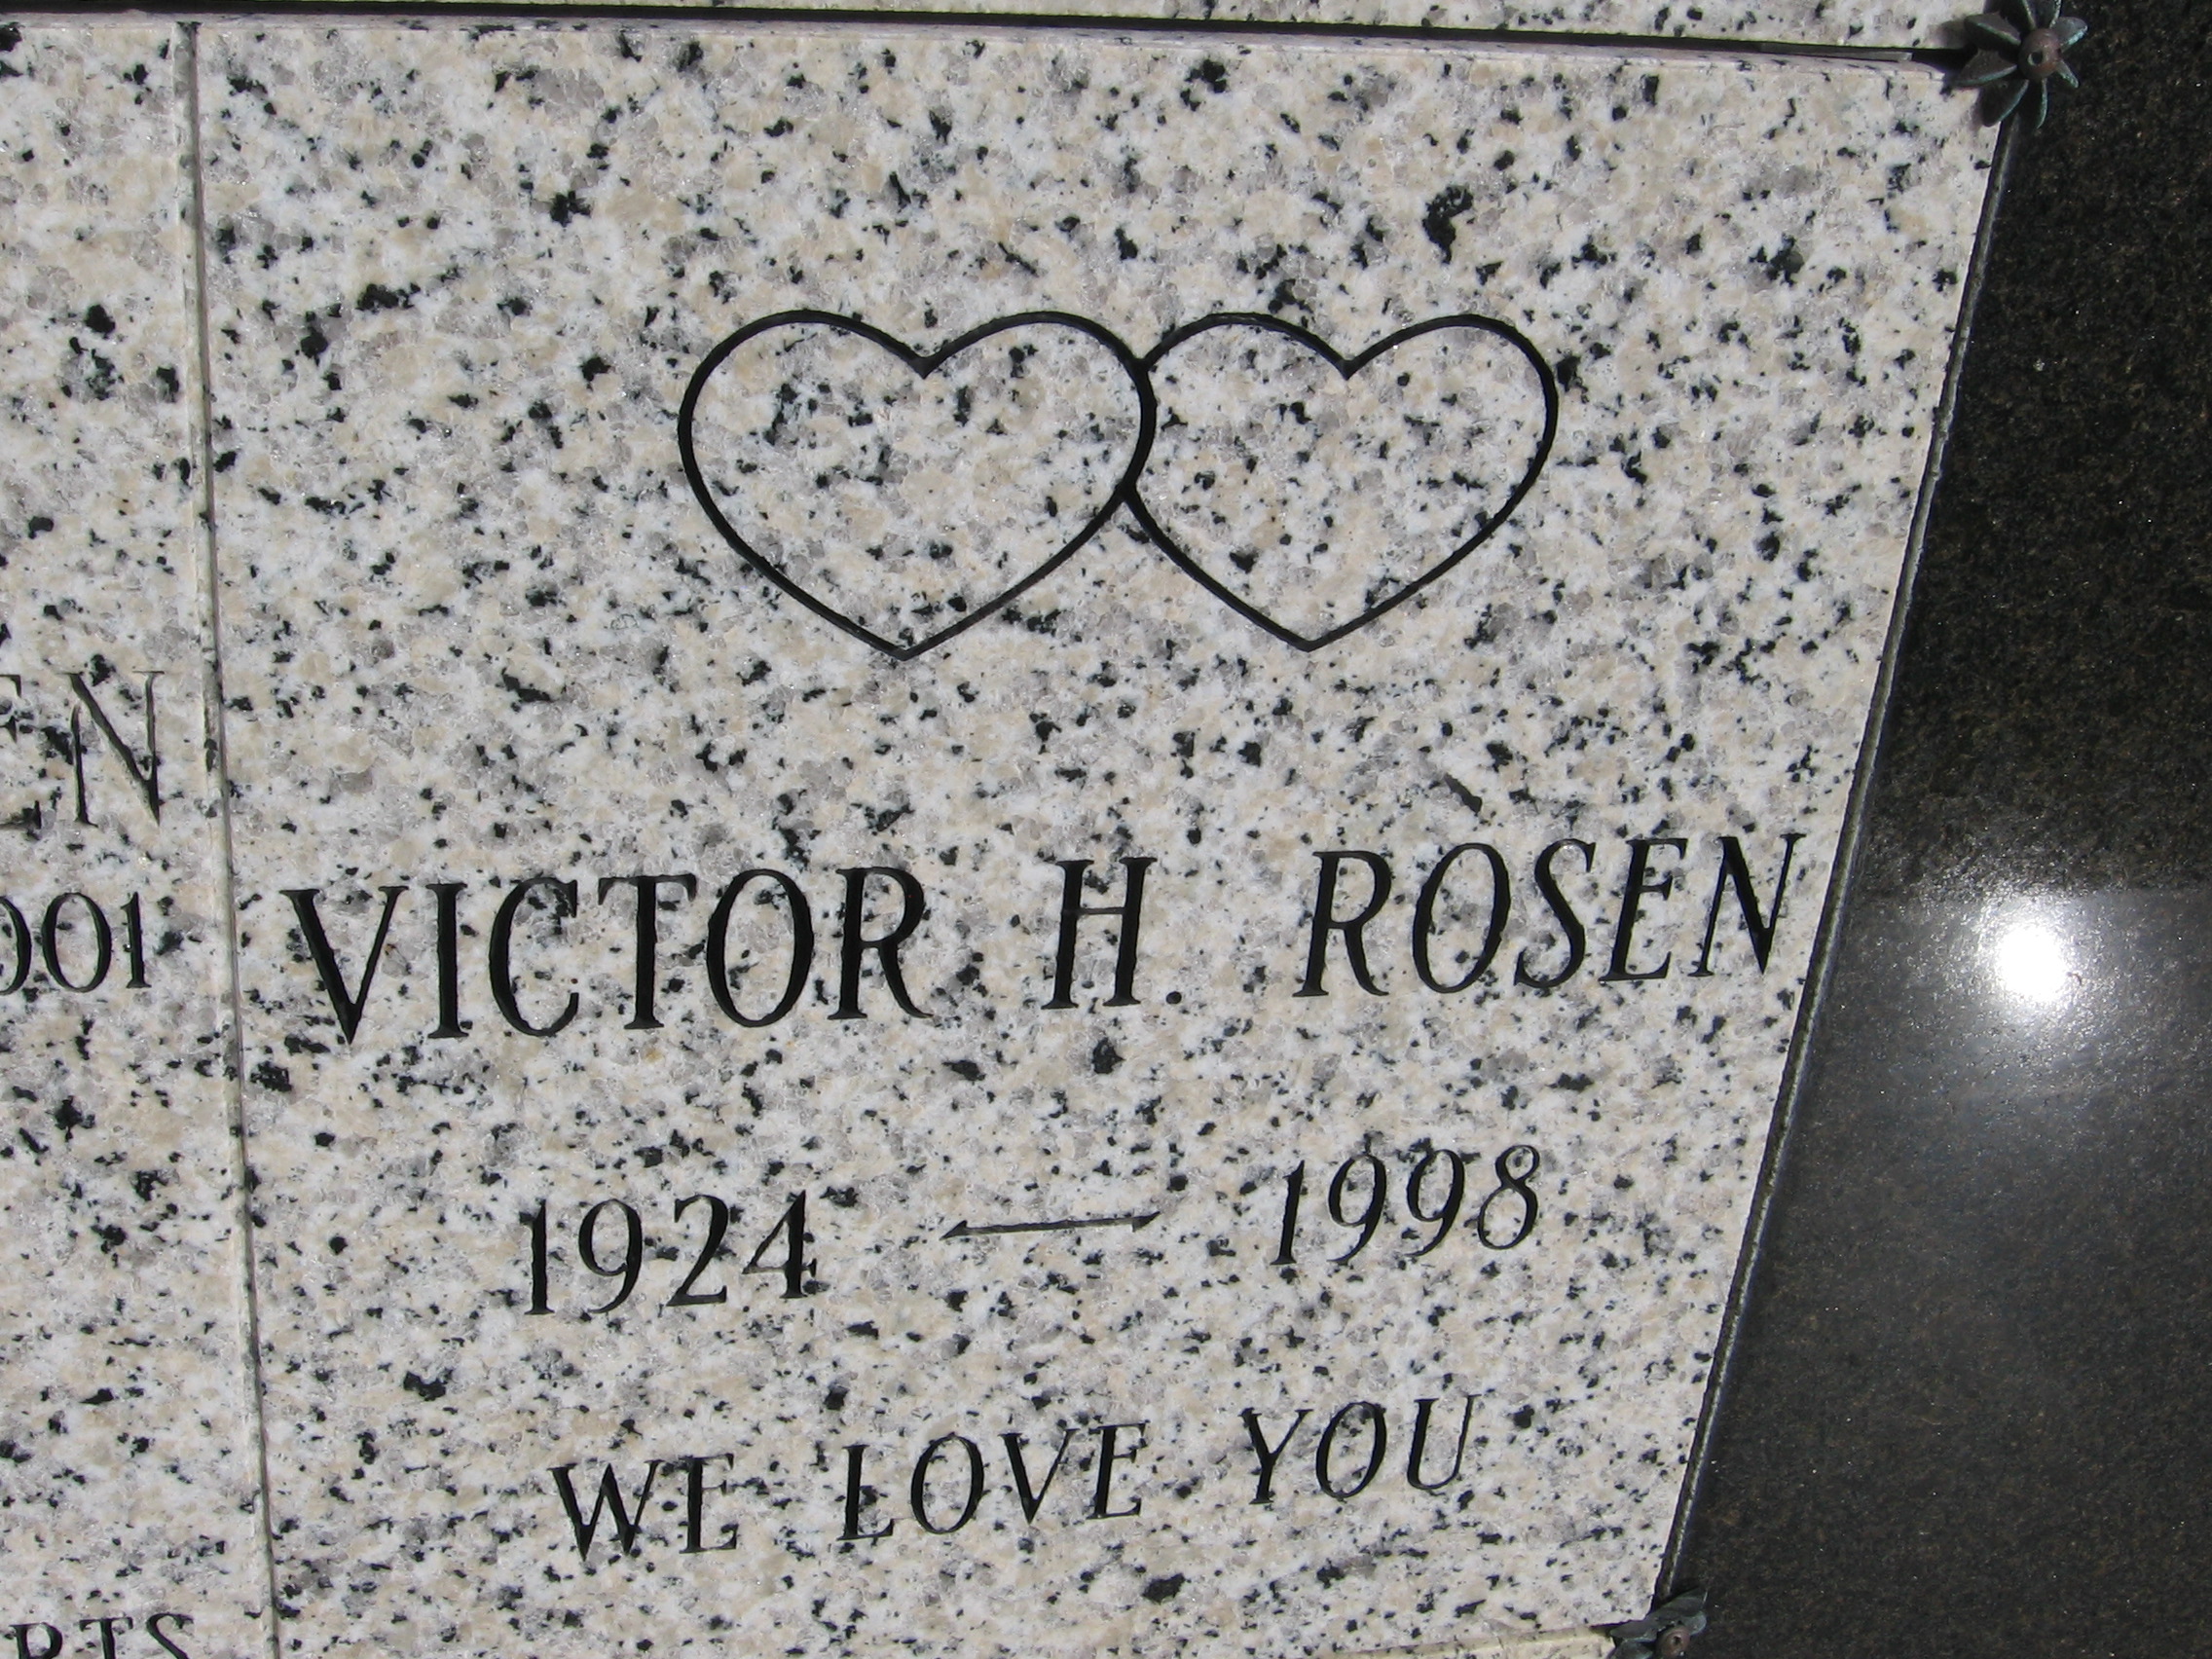 Victor H Rosen